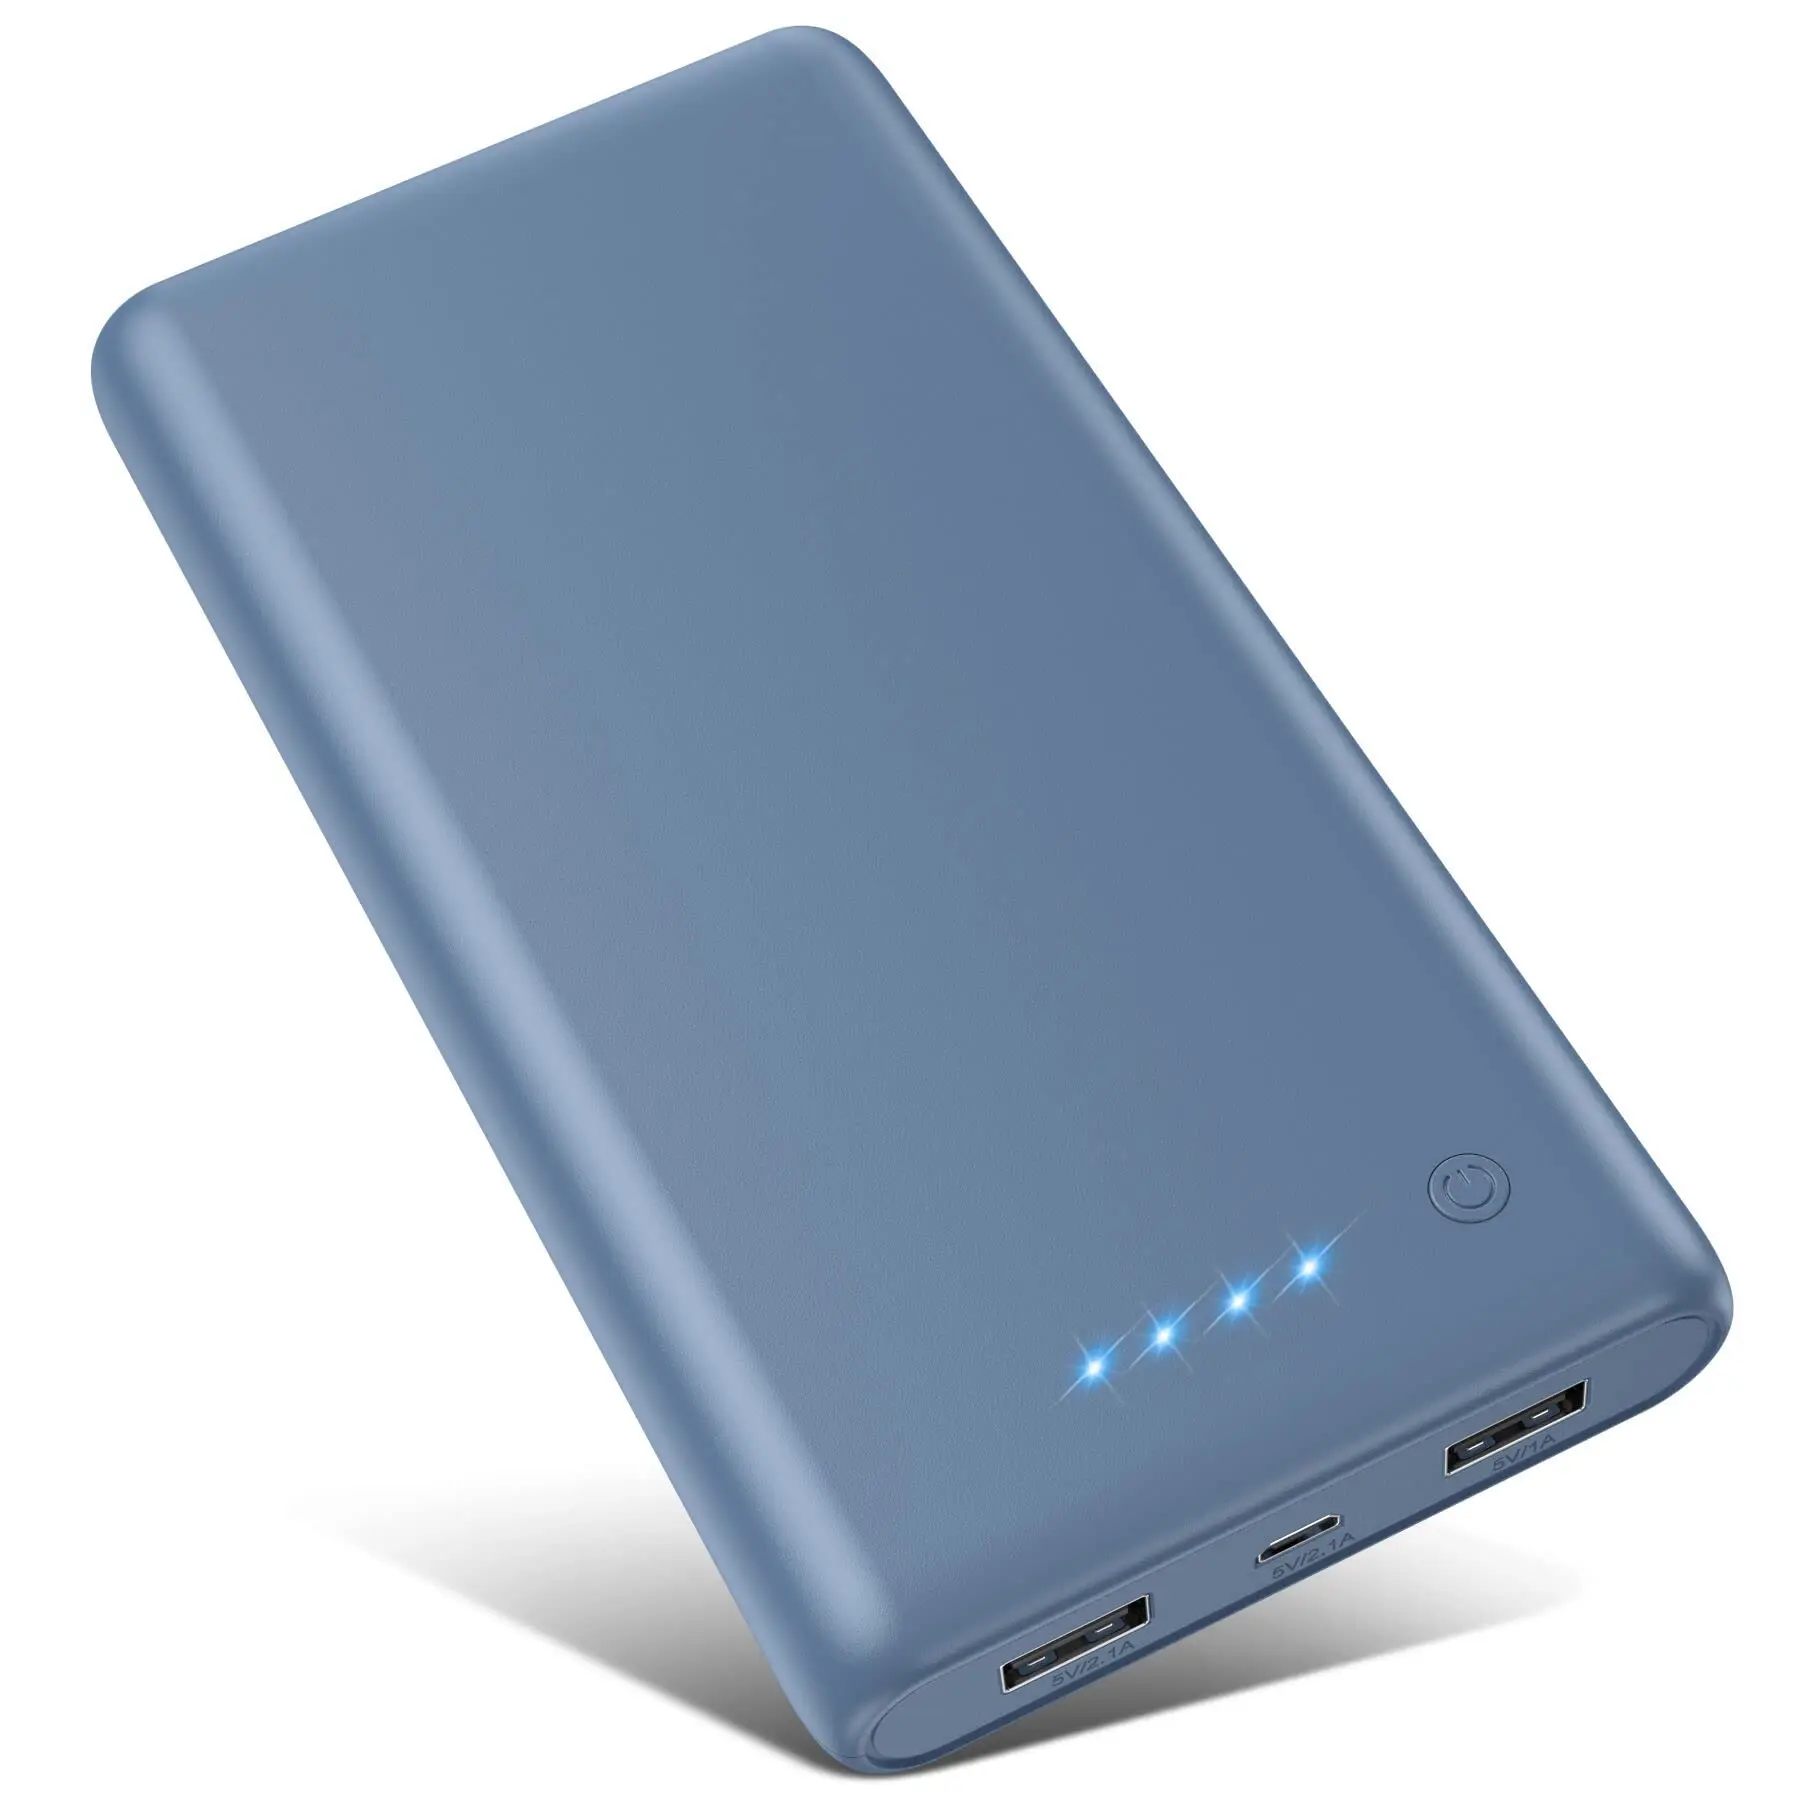 cargador de baterias de celular portatil - Cuál es la mejor marca de cargador portátil